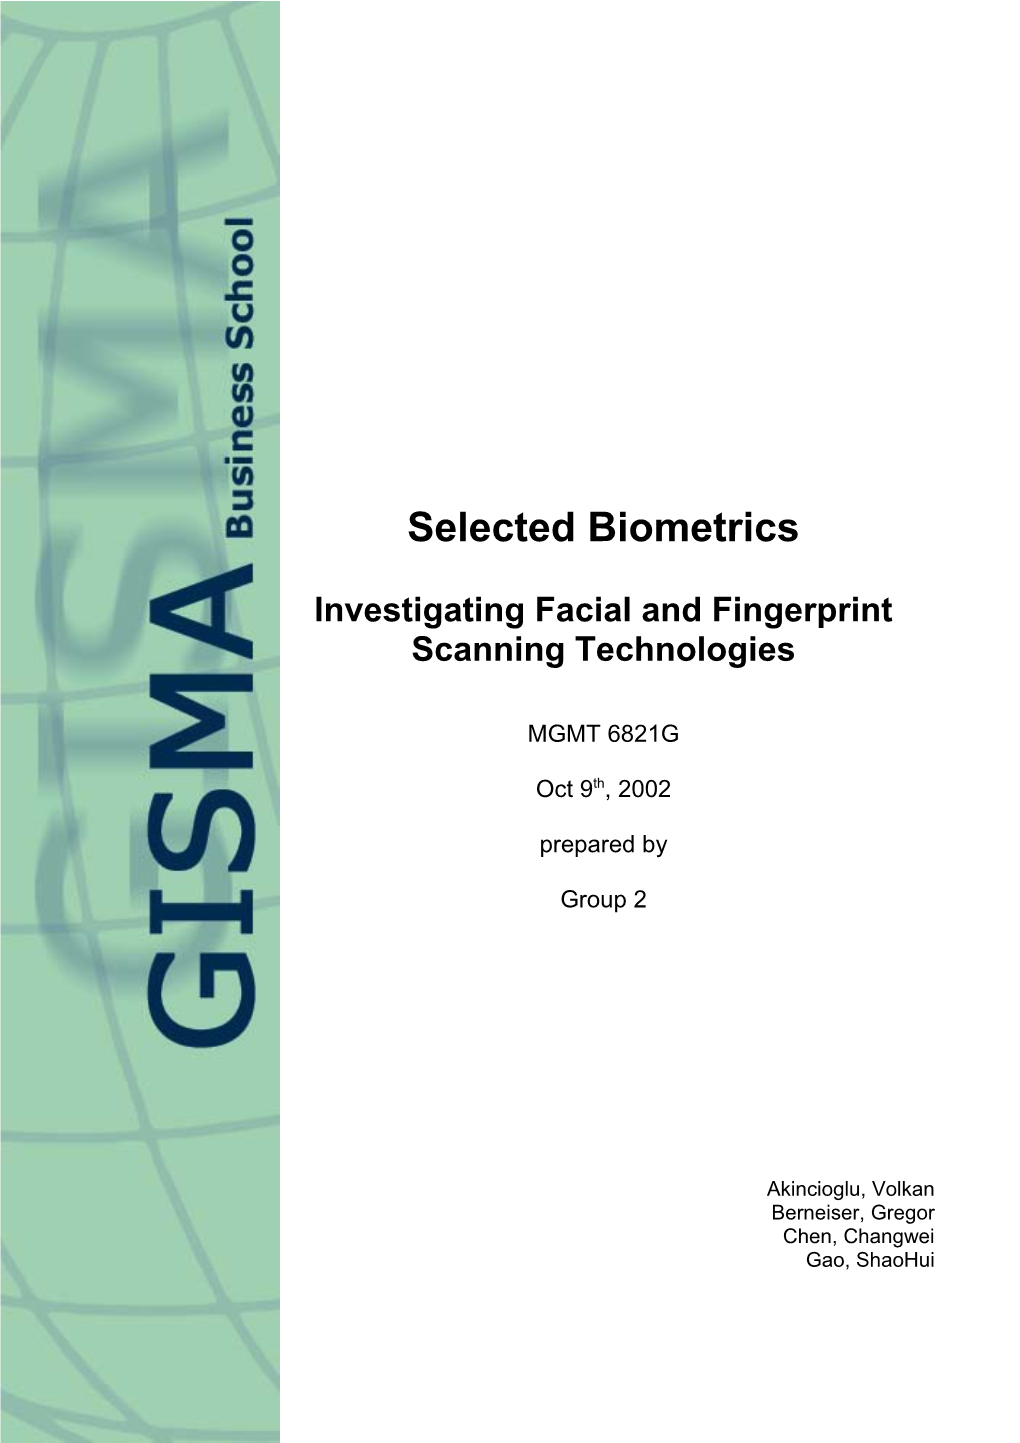 Selected Biometrics: Investigating Facial and Fingerprint Scanning Technologies